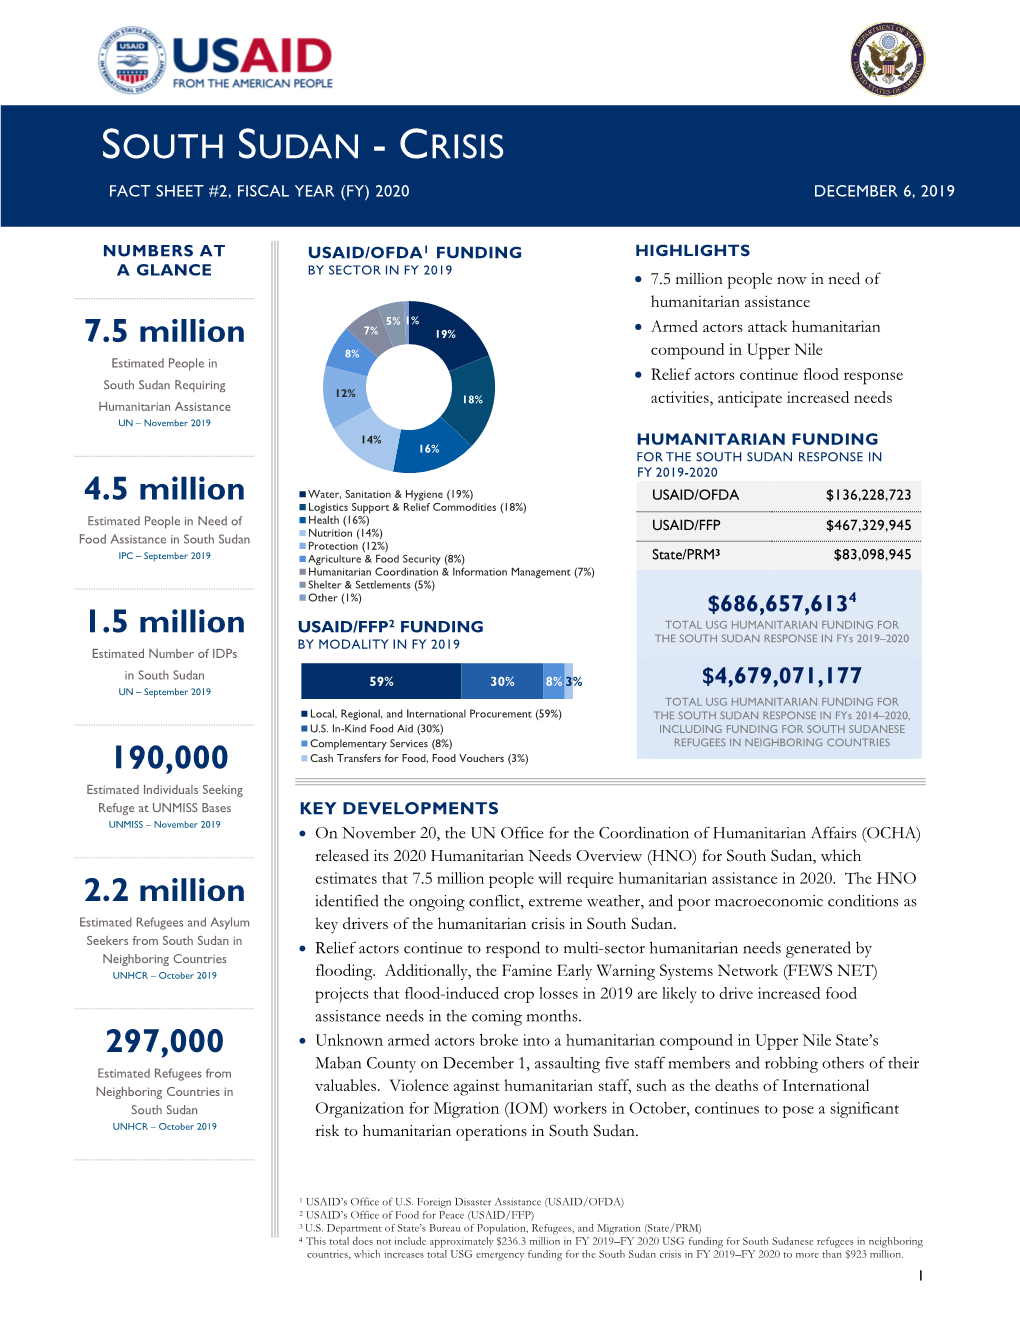 South Sudan - Crisis Fact Sheet #2, Fiscal Year (Fy) 2020 December 6, 2019